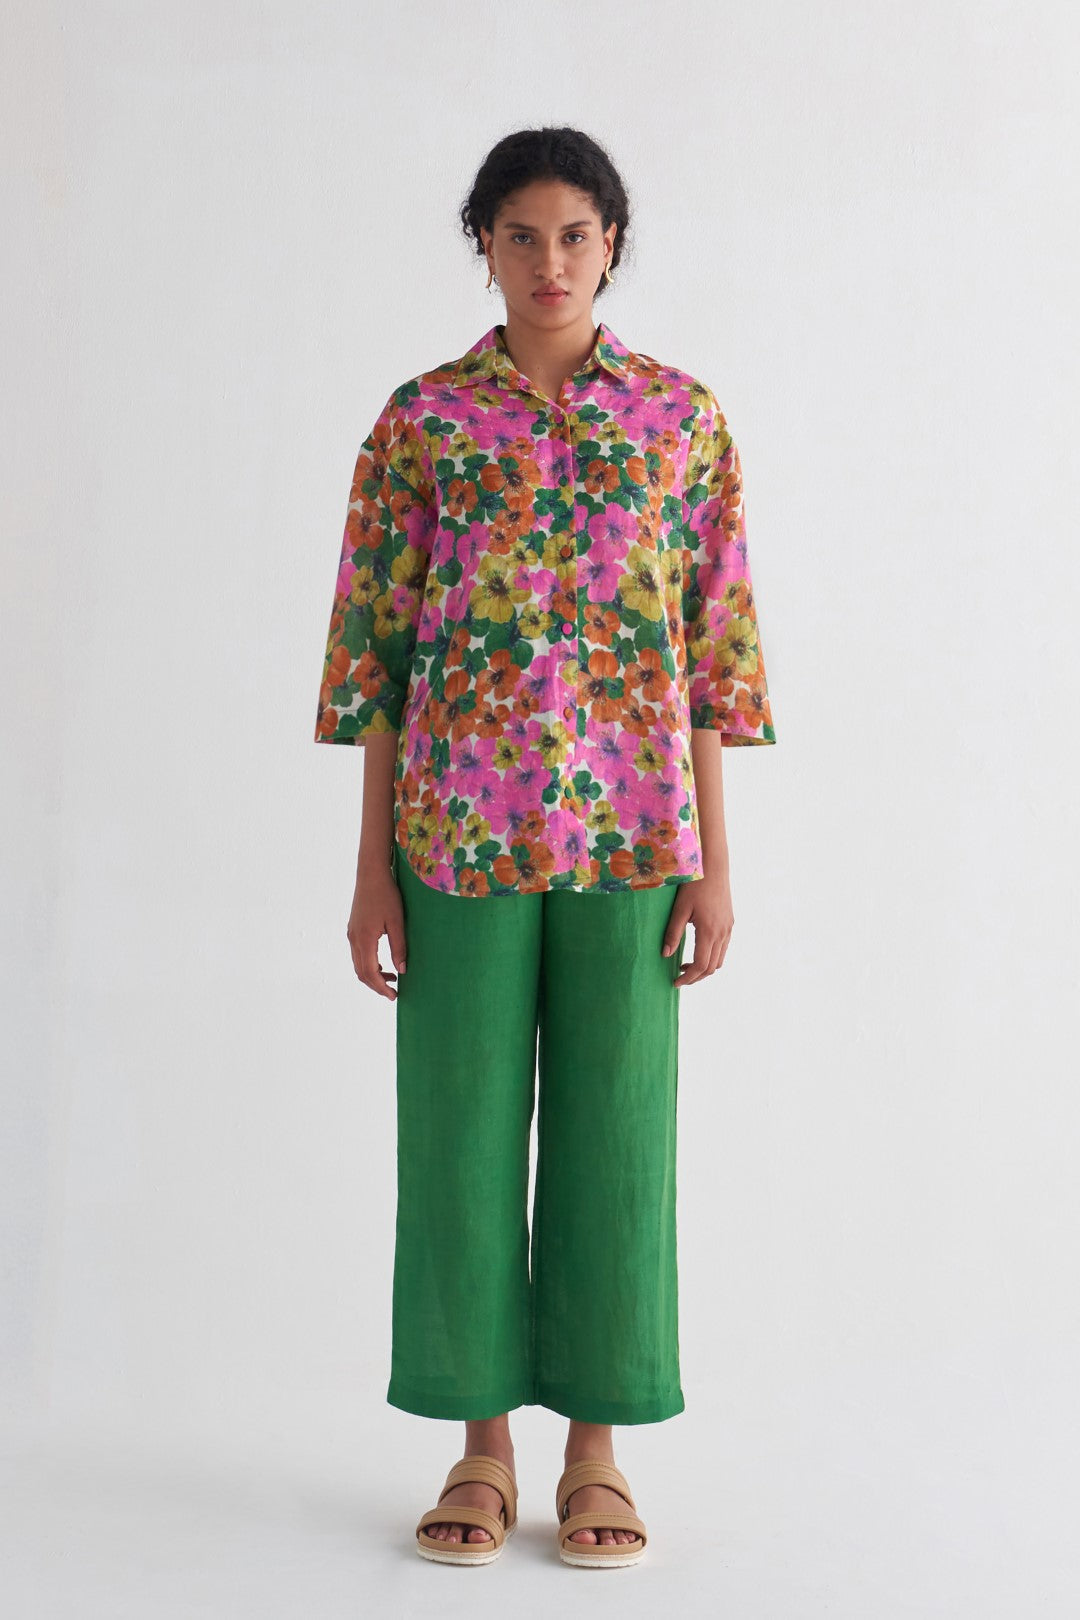 Multihued Gardenia Shirt with Green pants